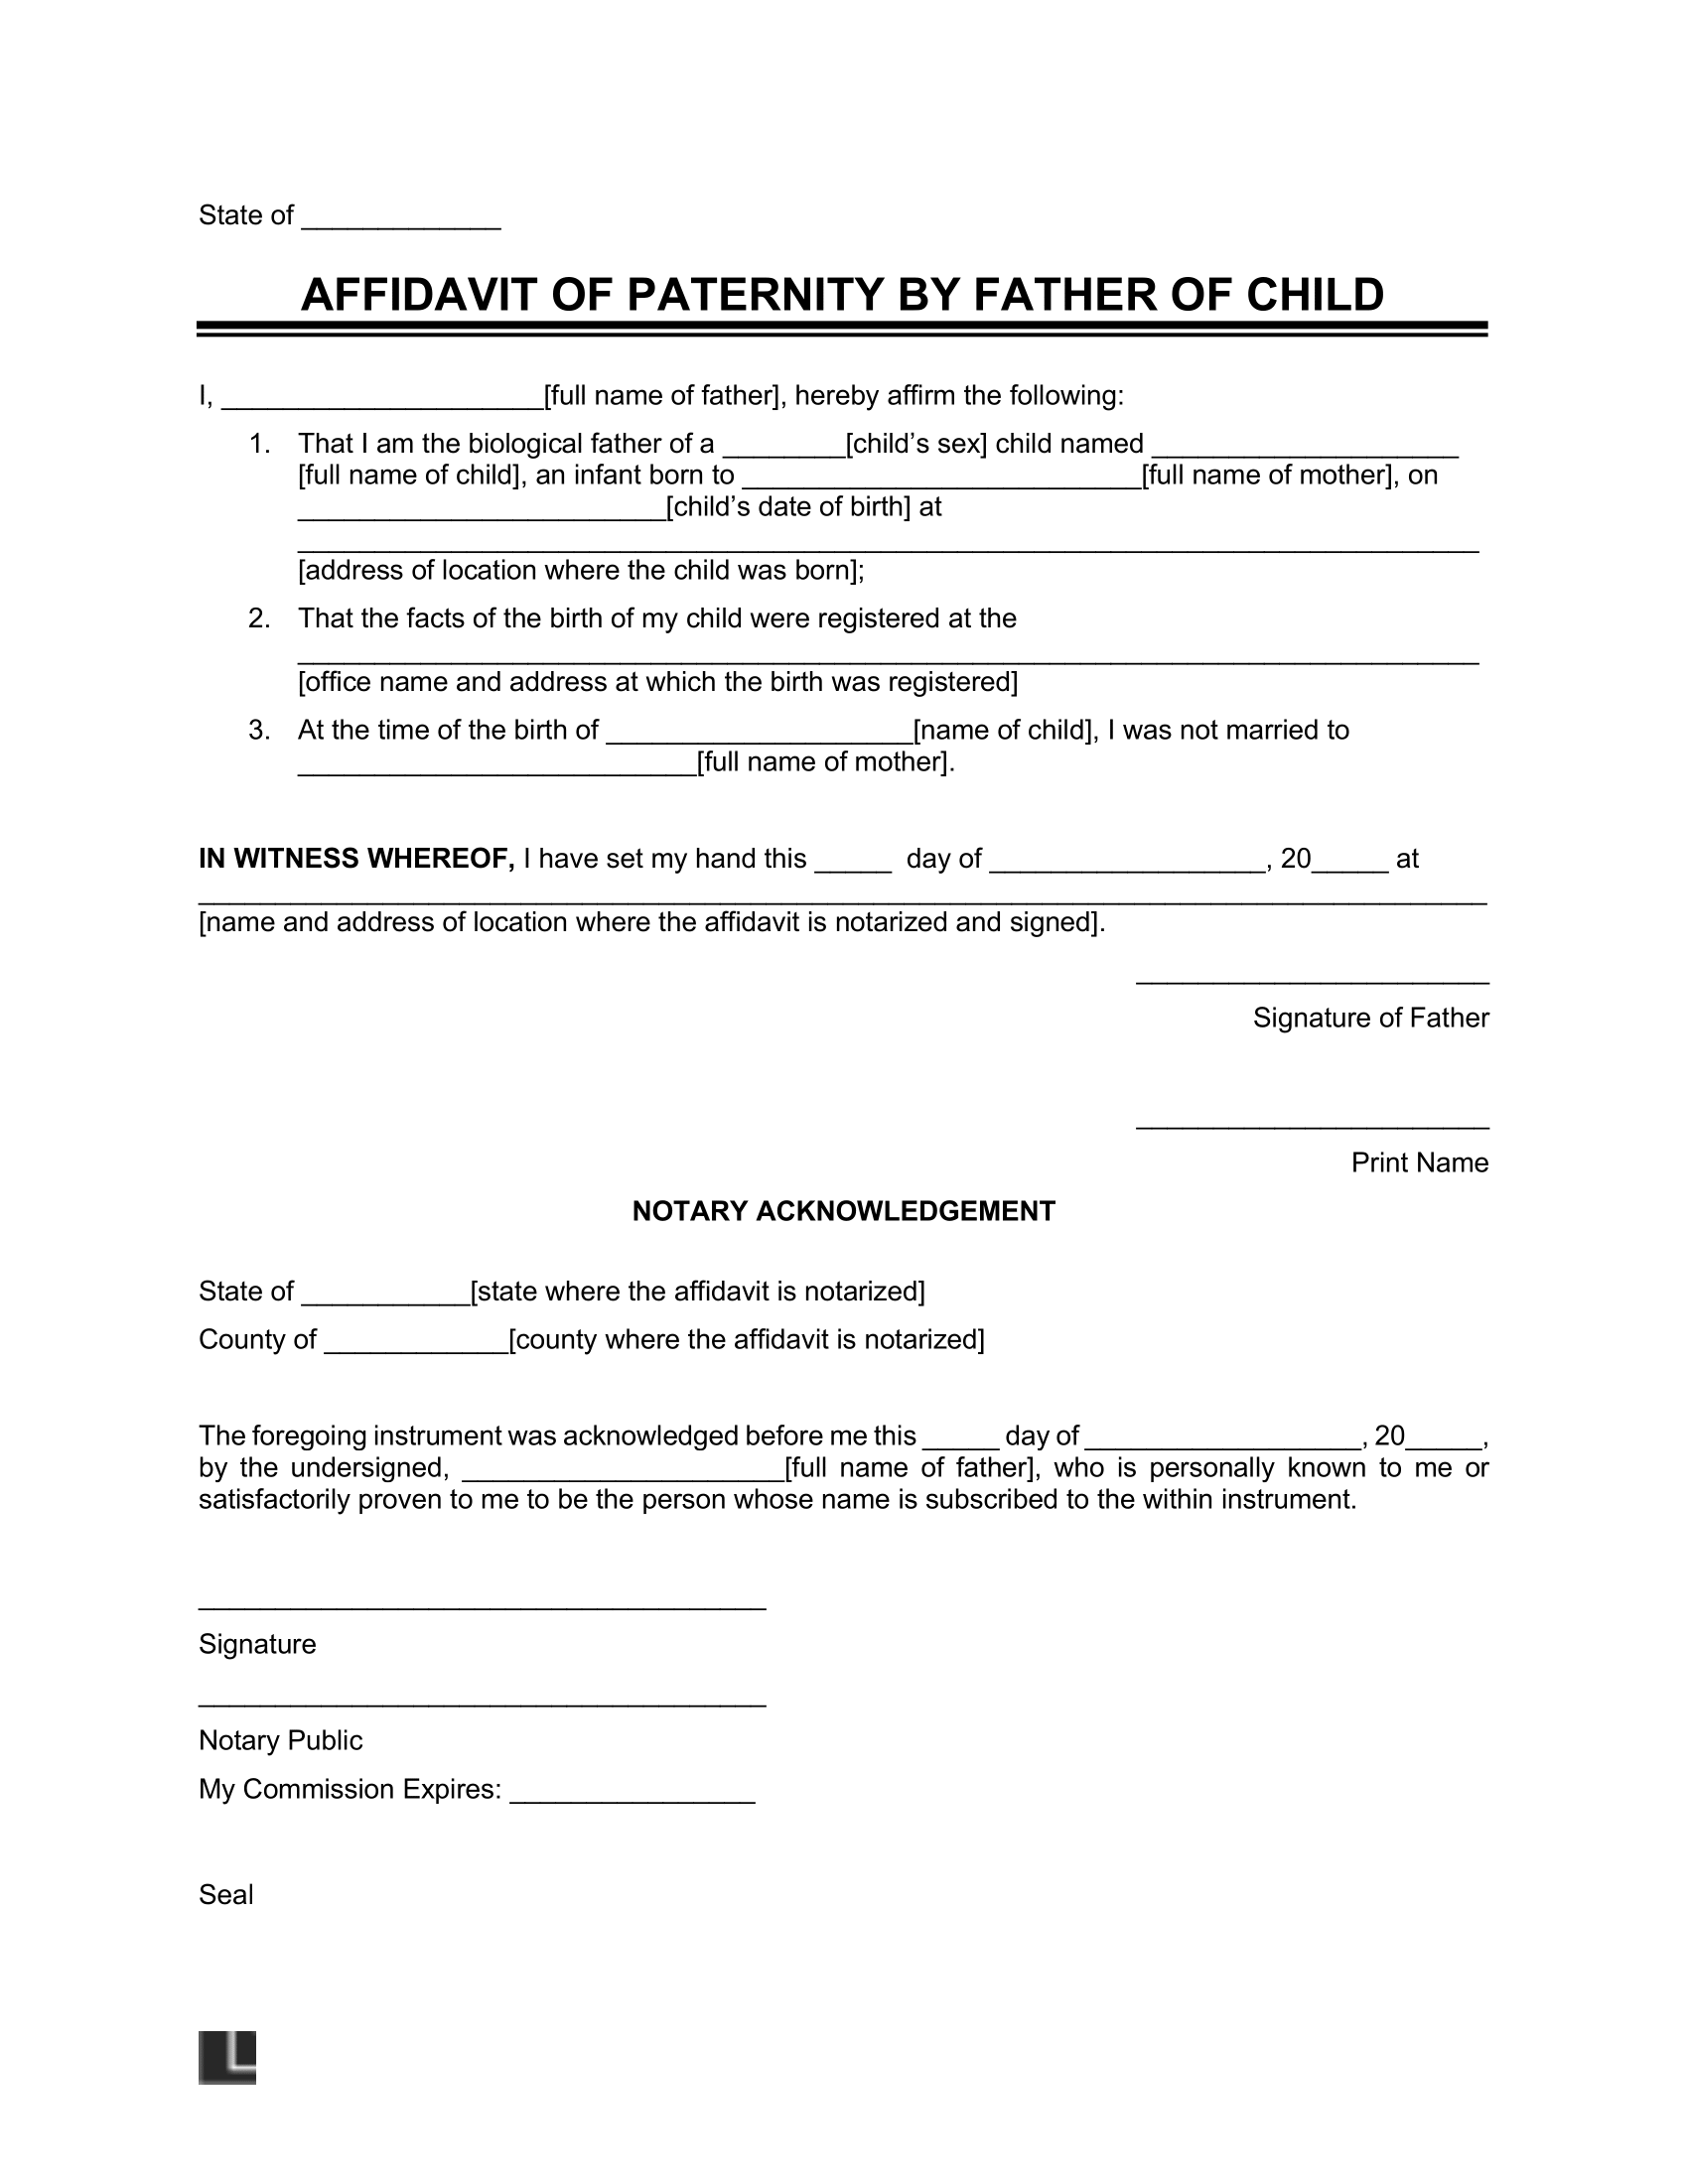 affidavit of paternity form